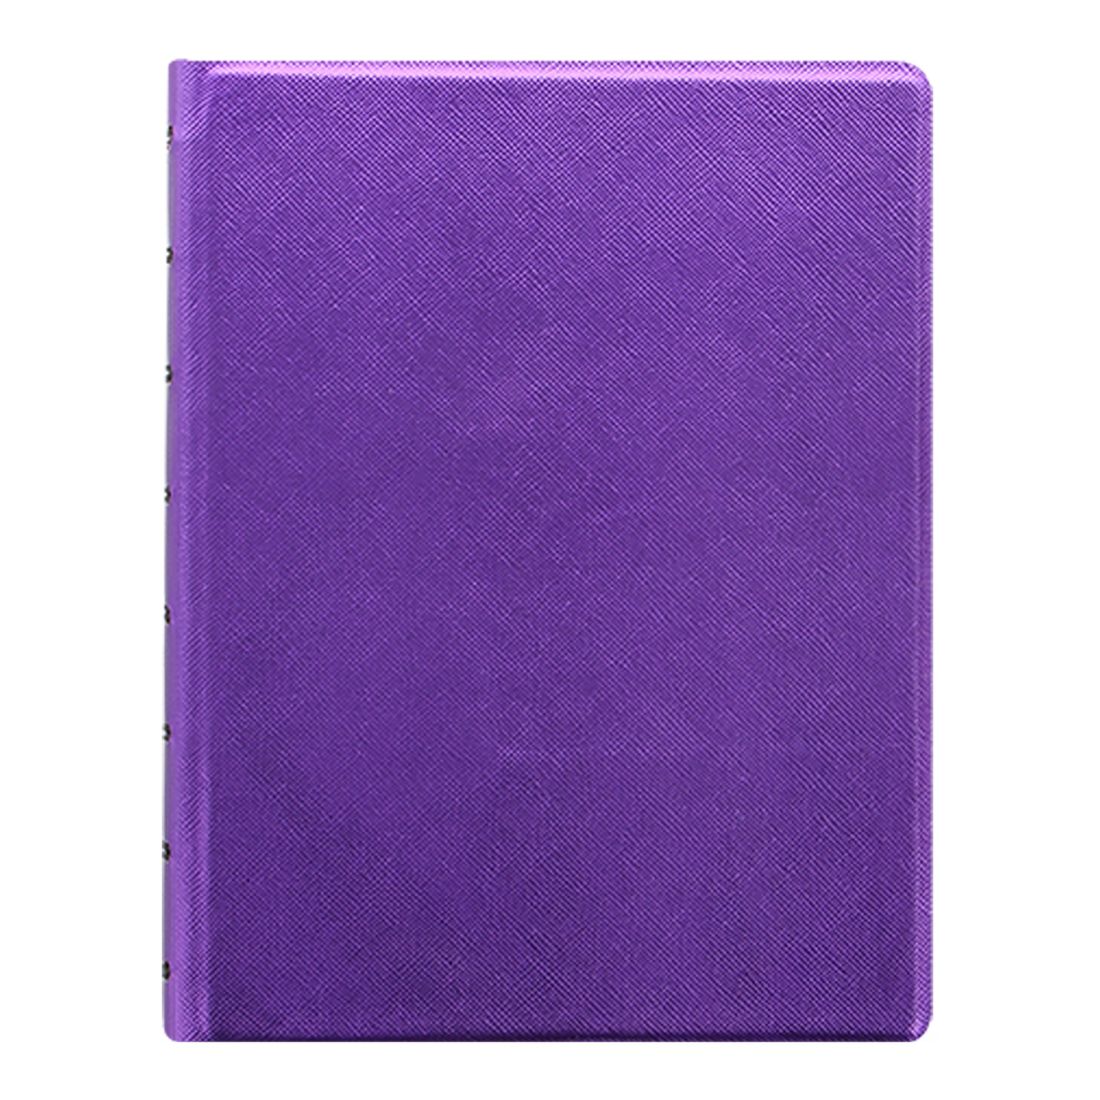 Filofax Saffiano Metallic A5 Notebook Violet Notebook